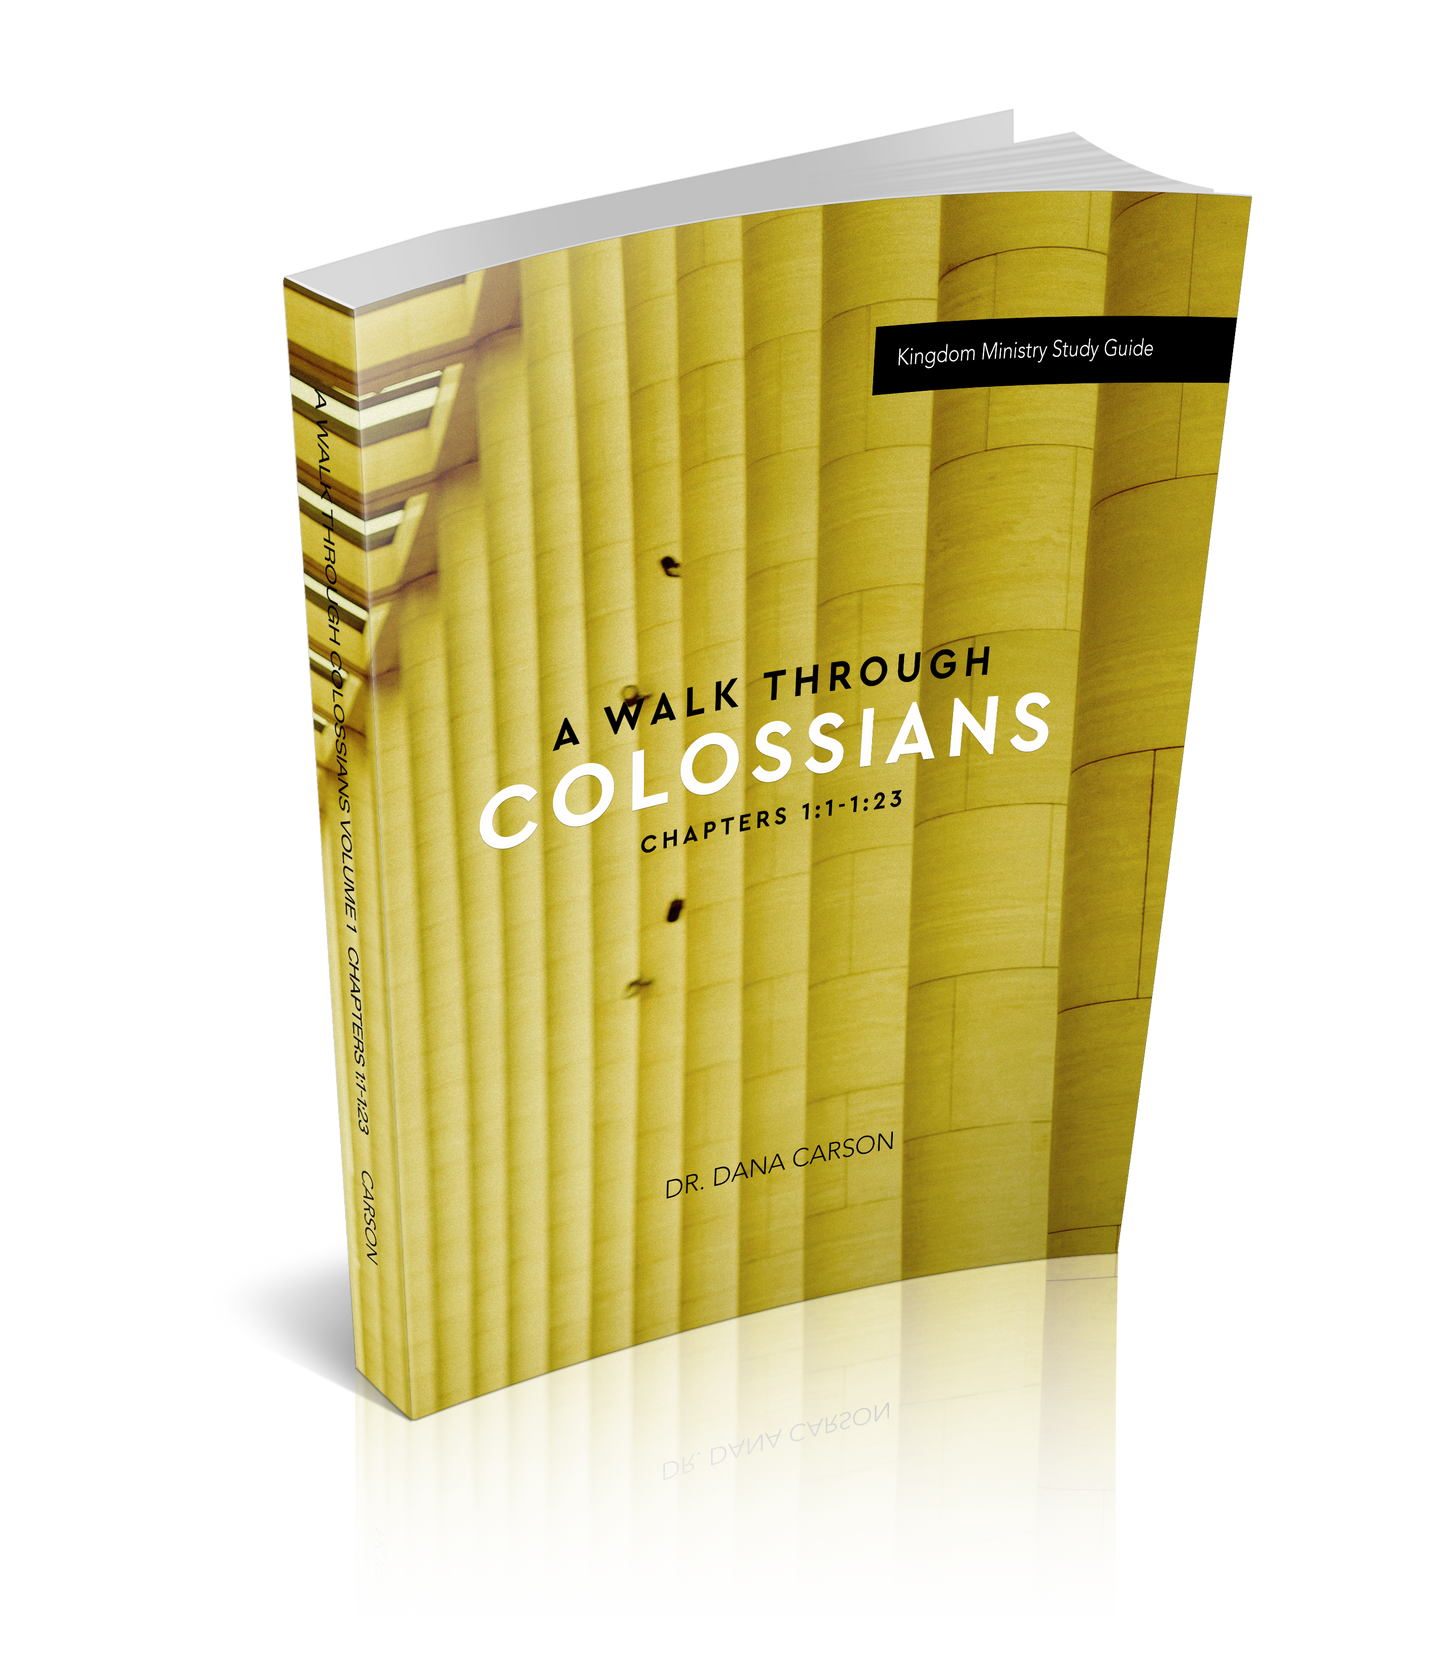 A Walk Through Colossians Volume 1 Kingdom Bible Study Guide